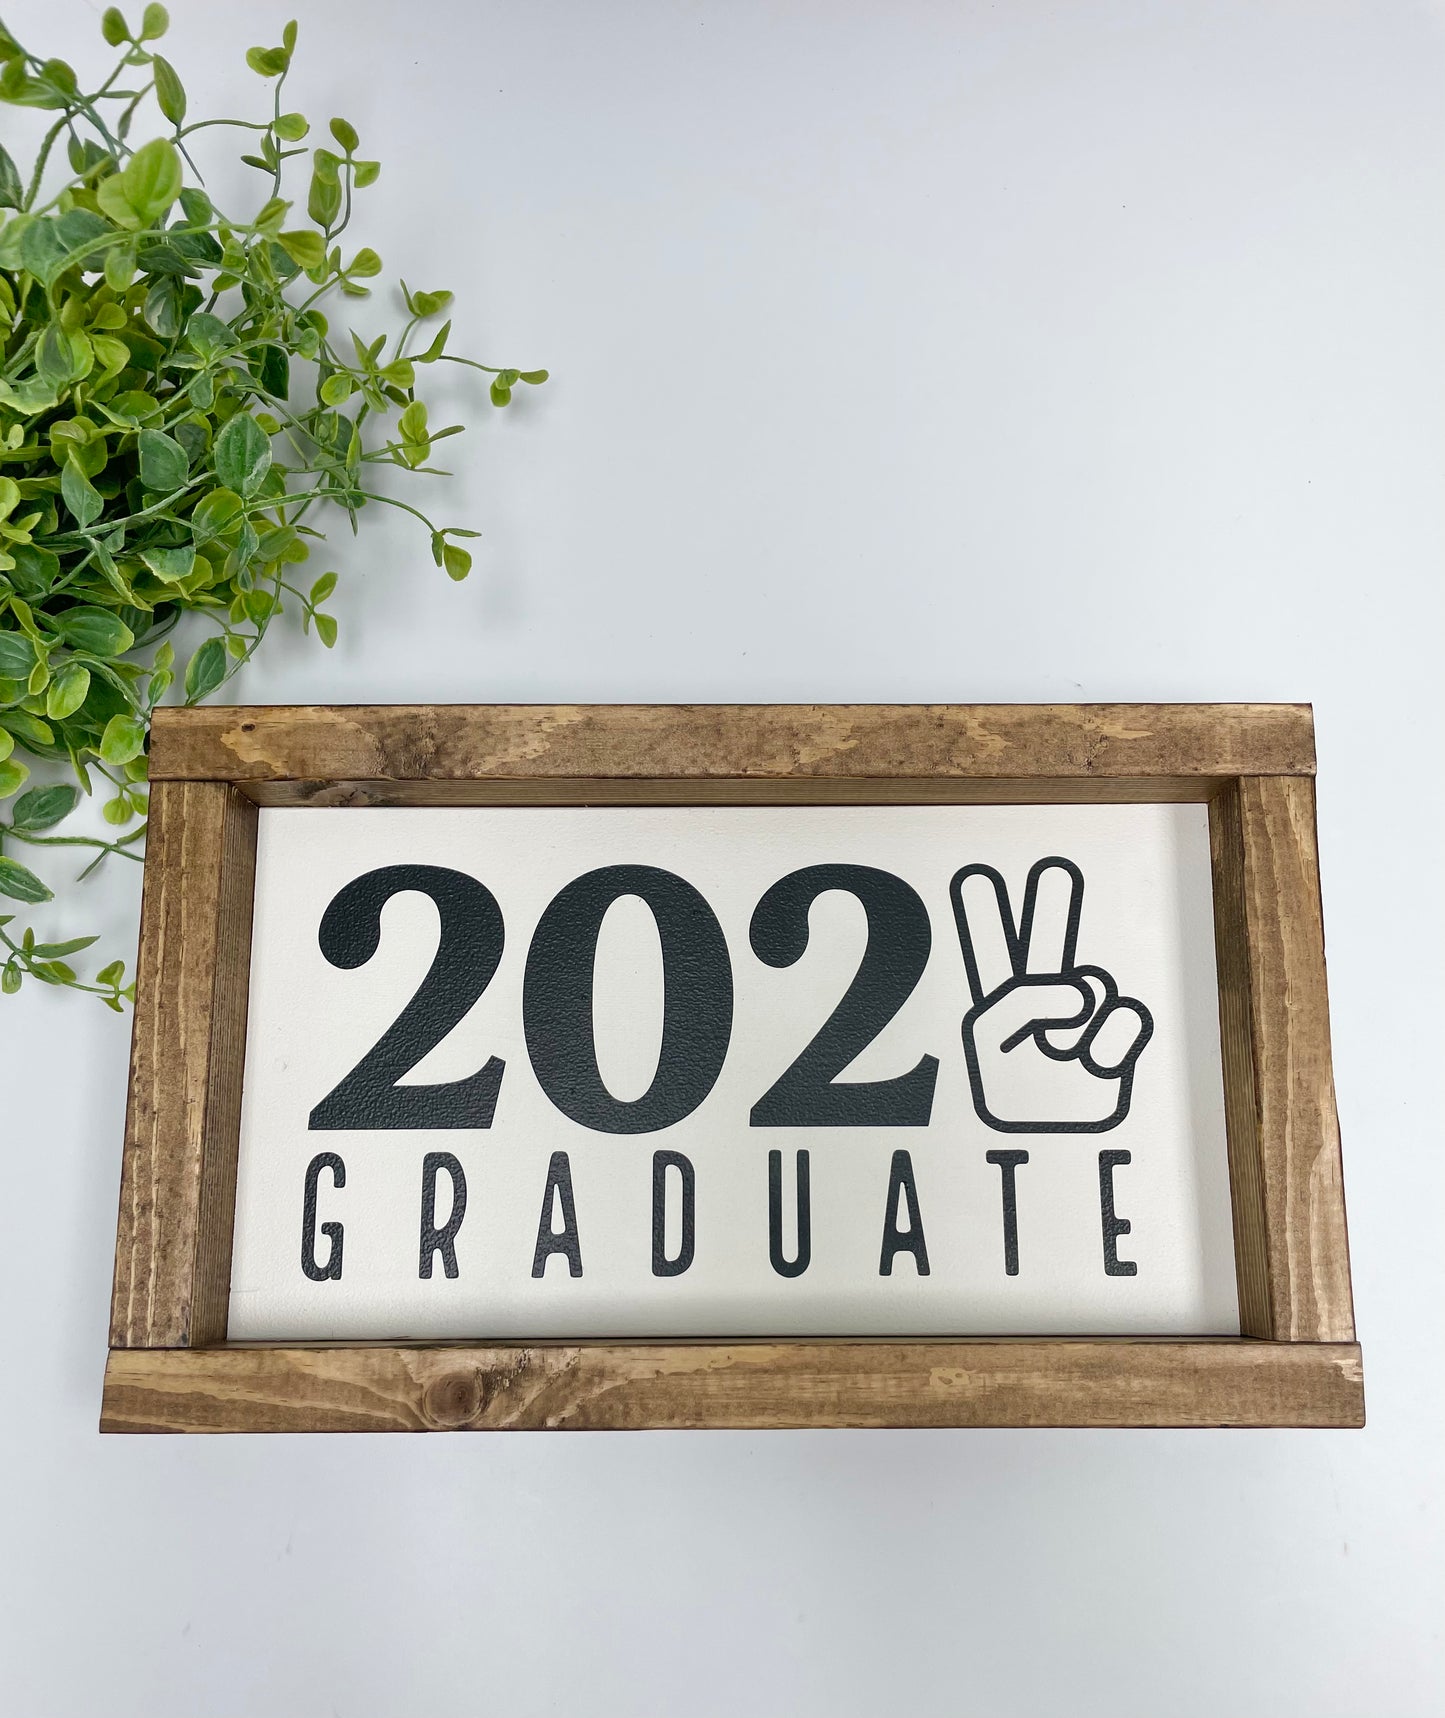 Handmade Sign - 2022 Graduate